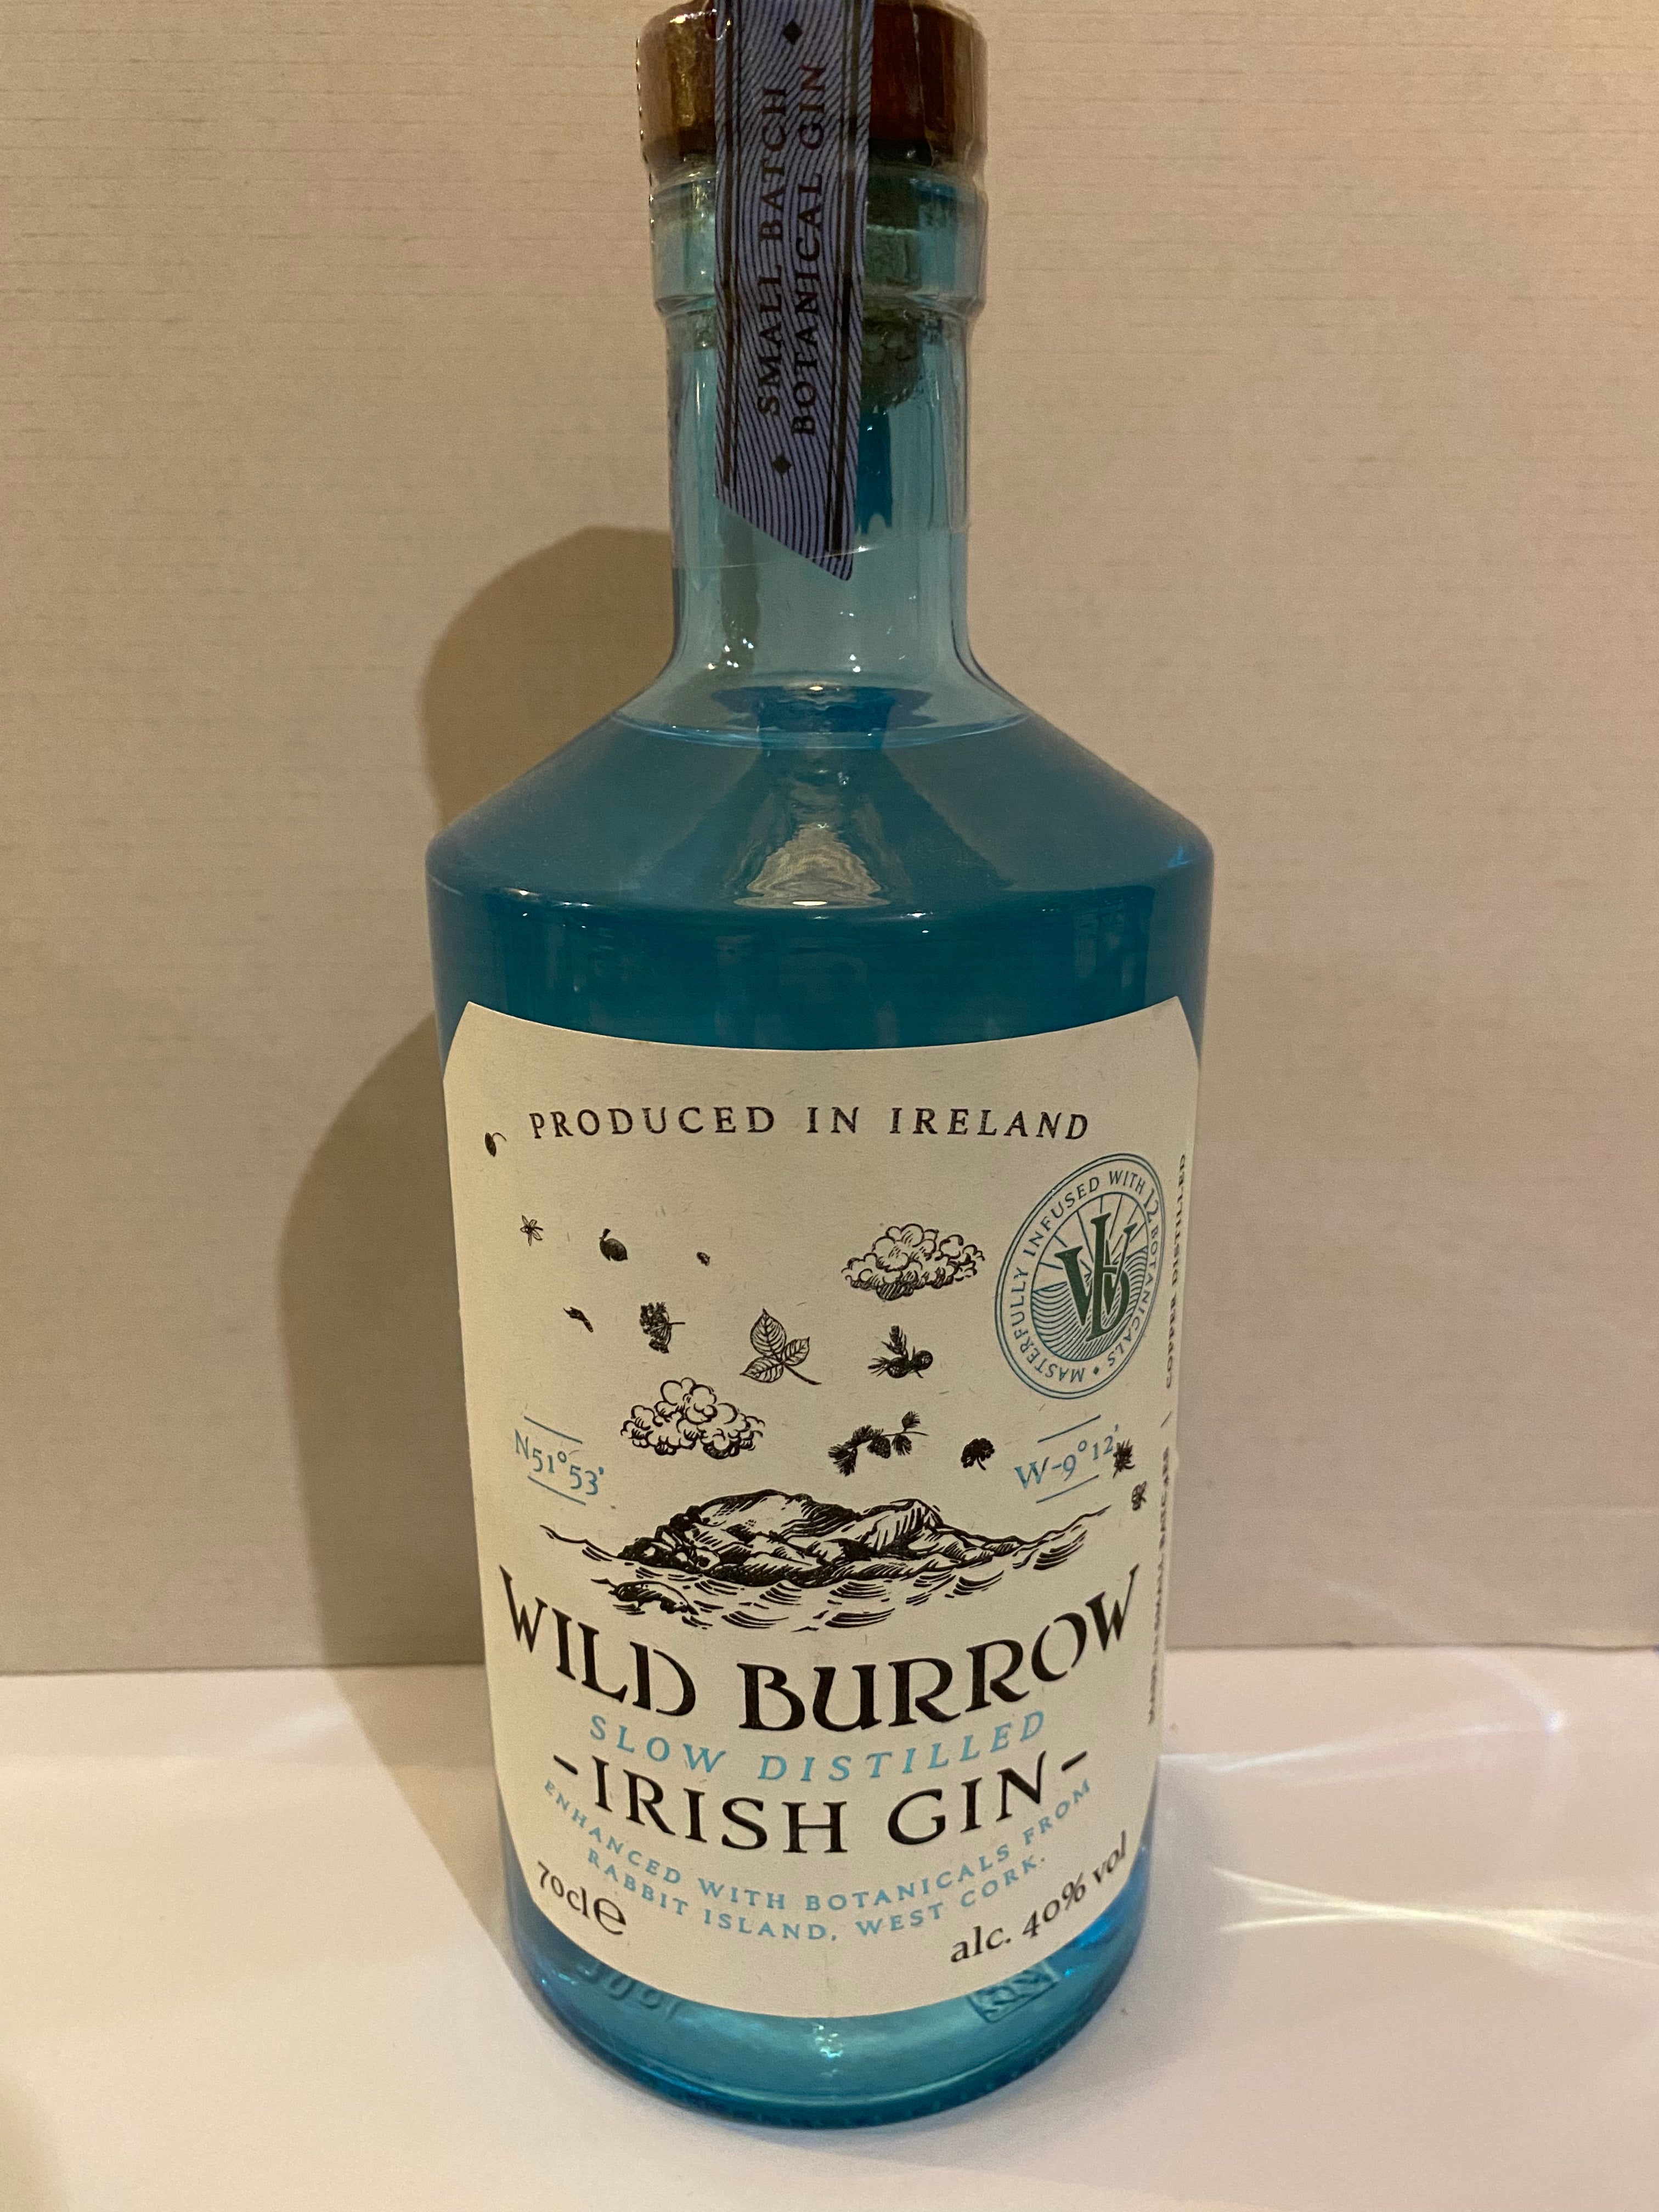 Wild Burrow Gin Irish House of Distilled Gin – Slow